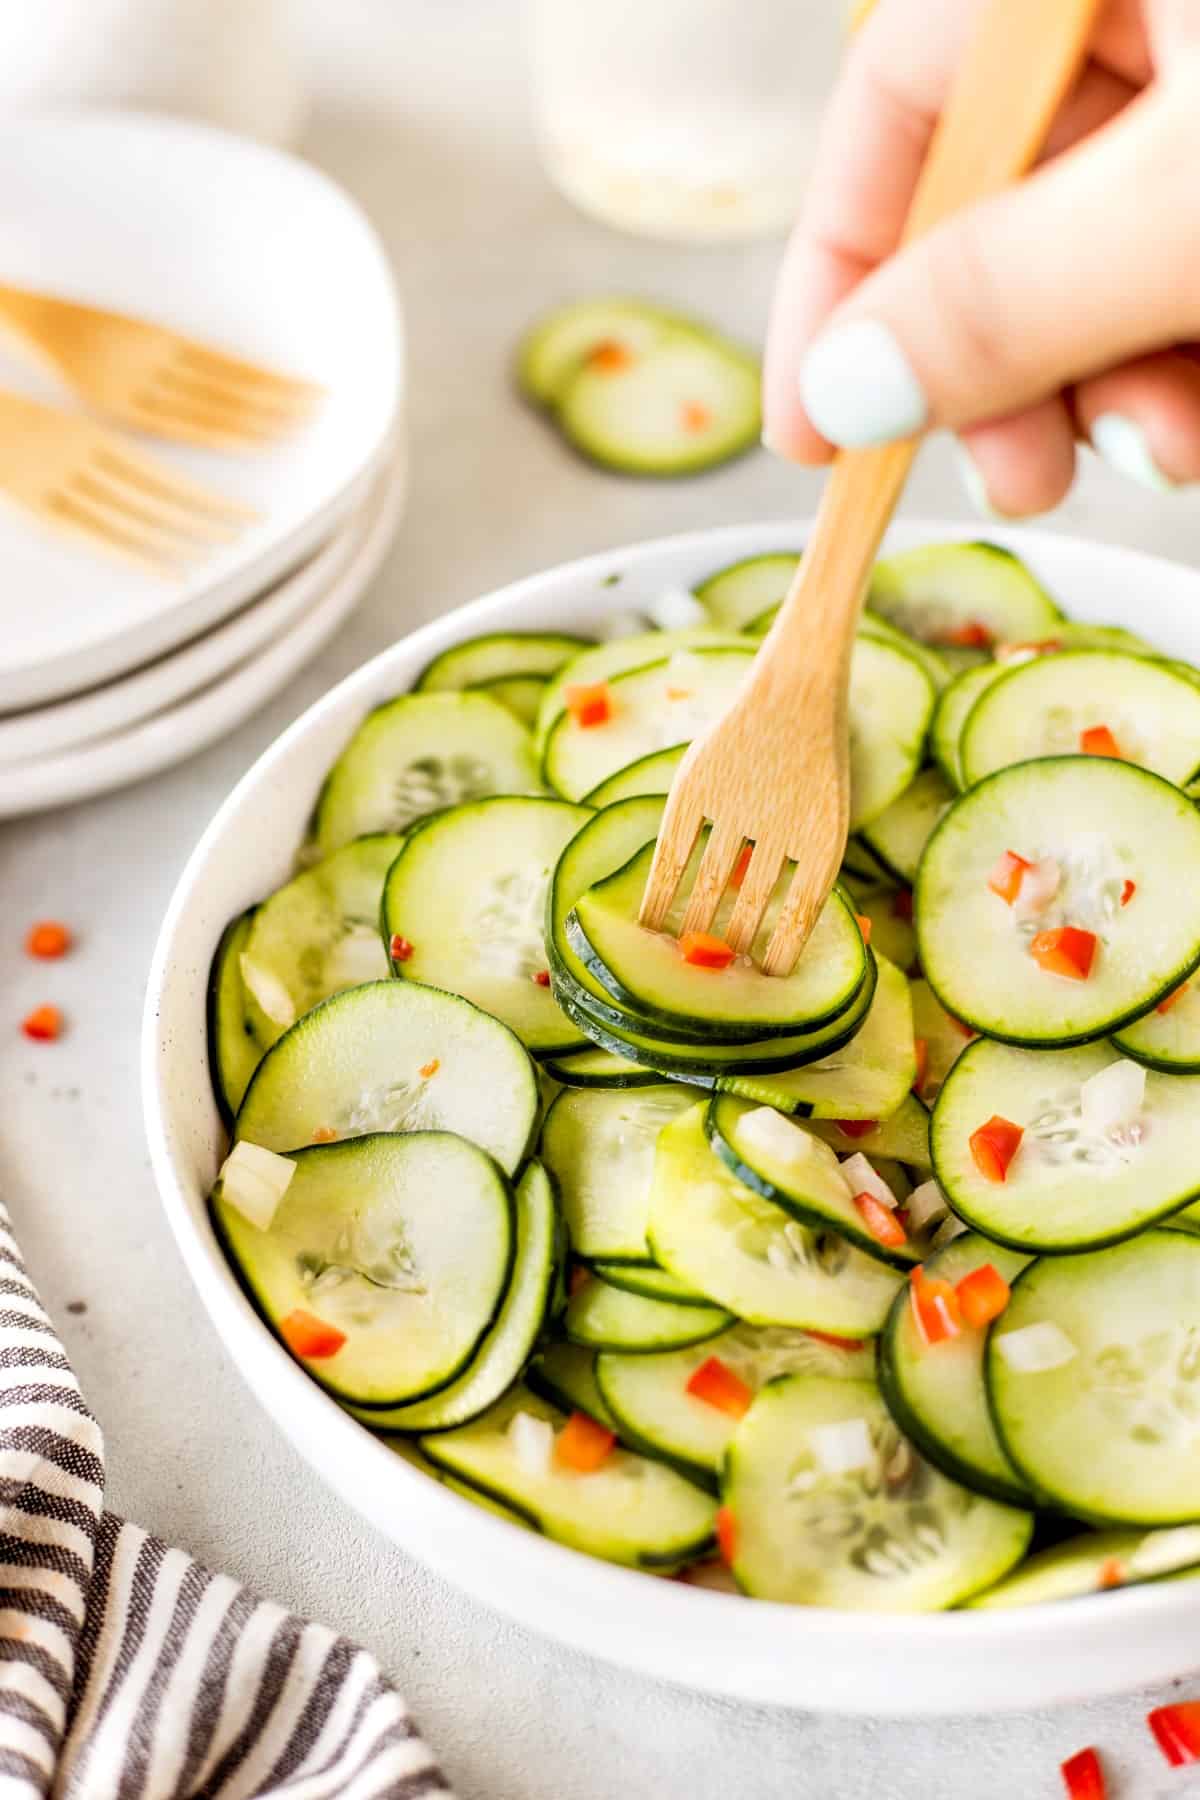 Sticking a wooden fork into cucumber salad